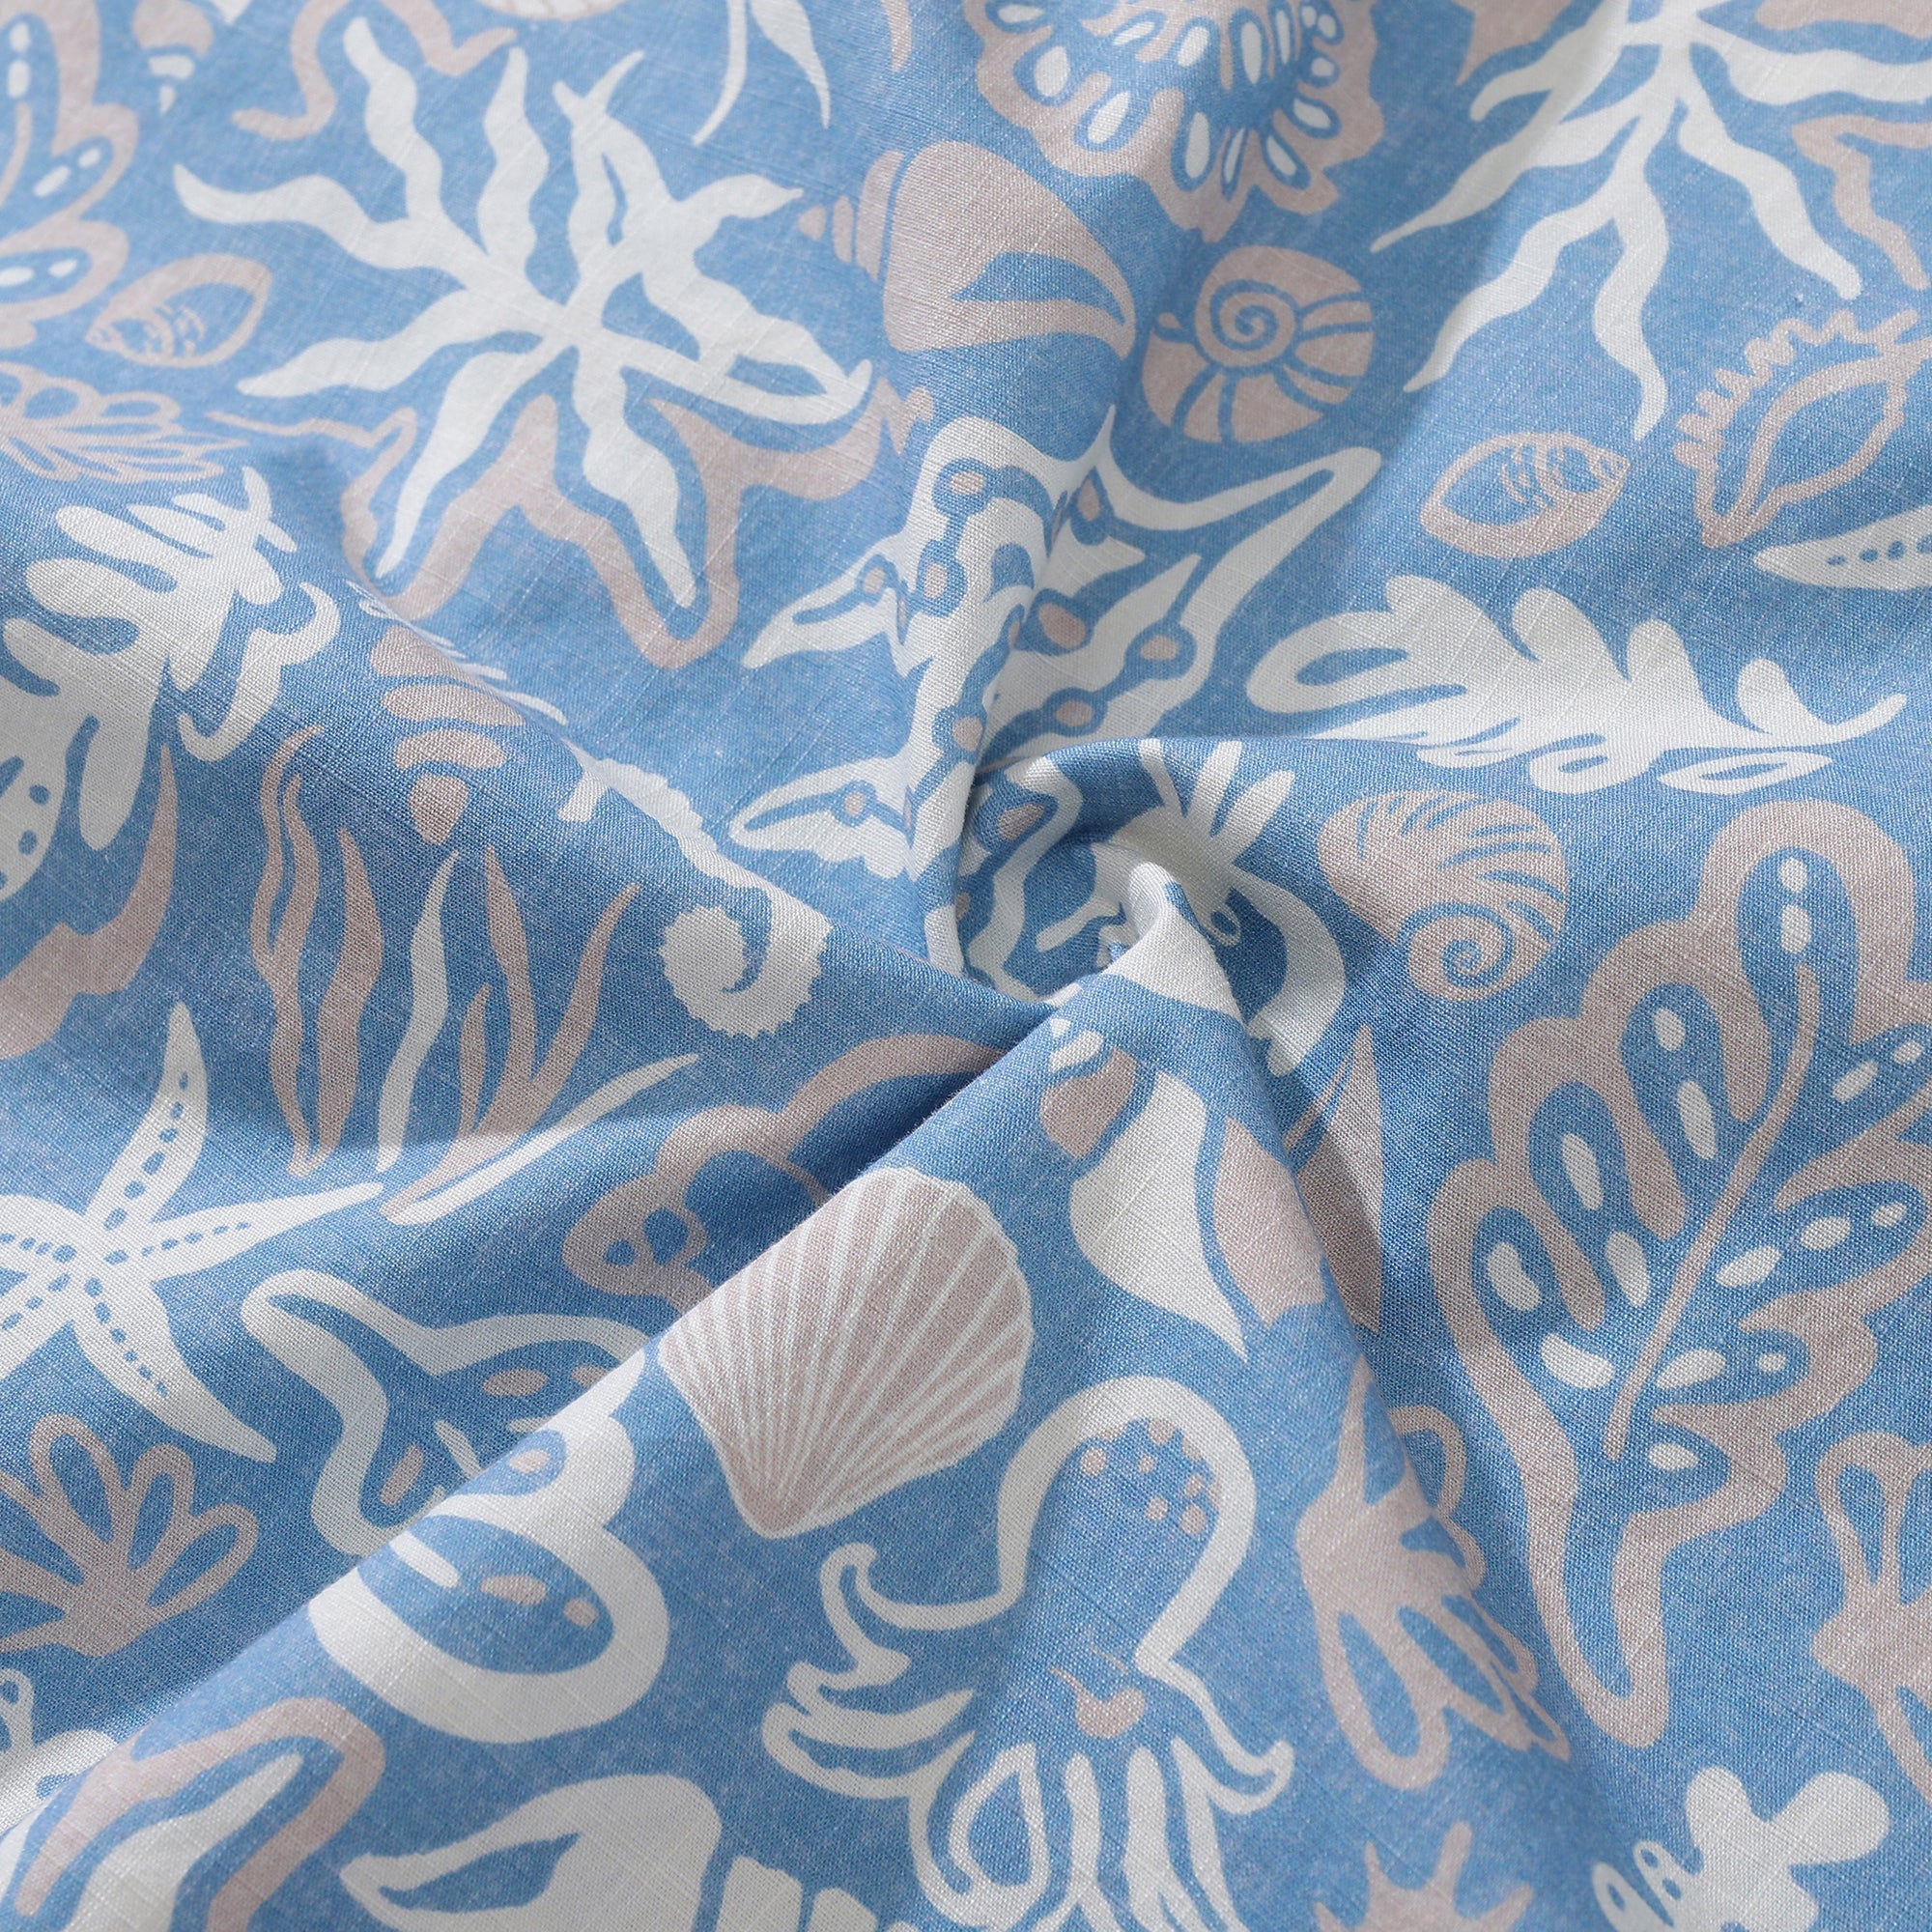 Cotton Hawaiian Shirts Australia for Men Oceanic Silhouette Print 100% Cotton Short-Sleeved - Blue